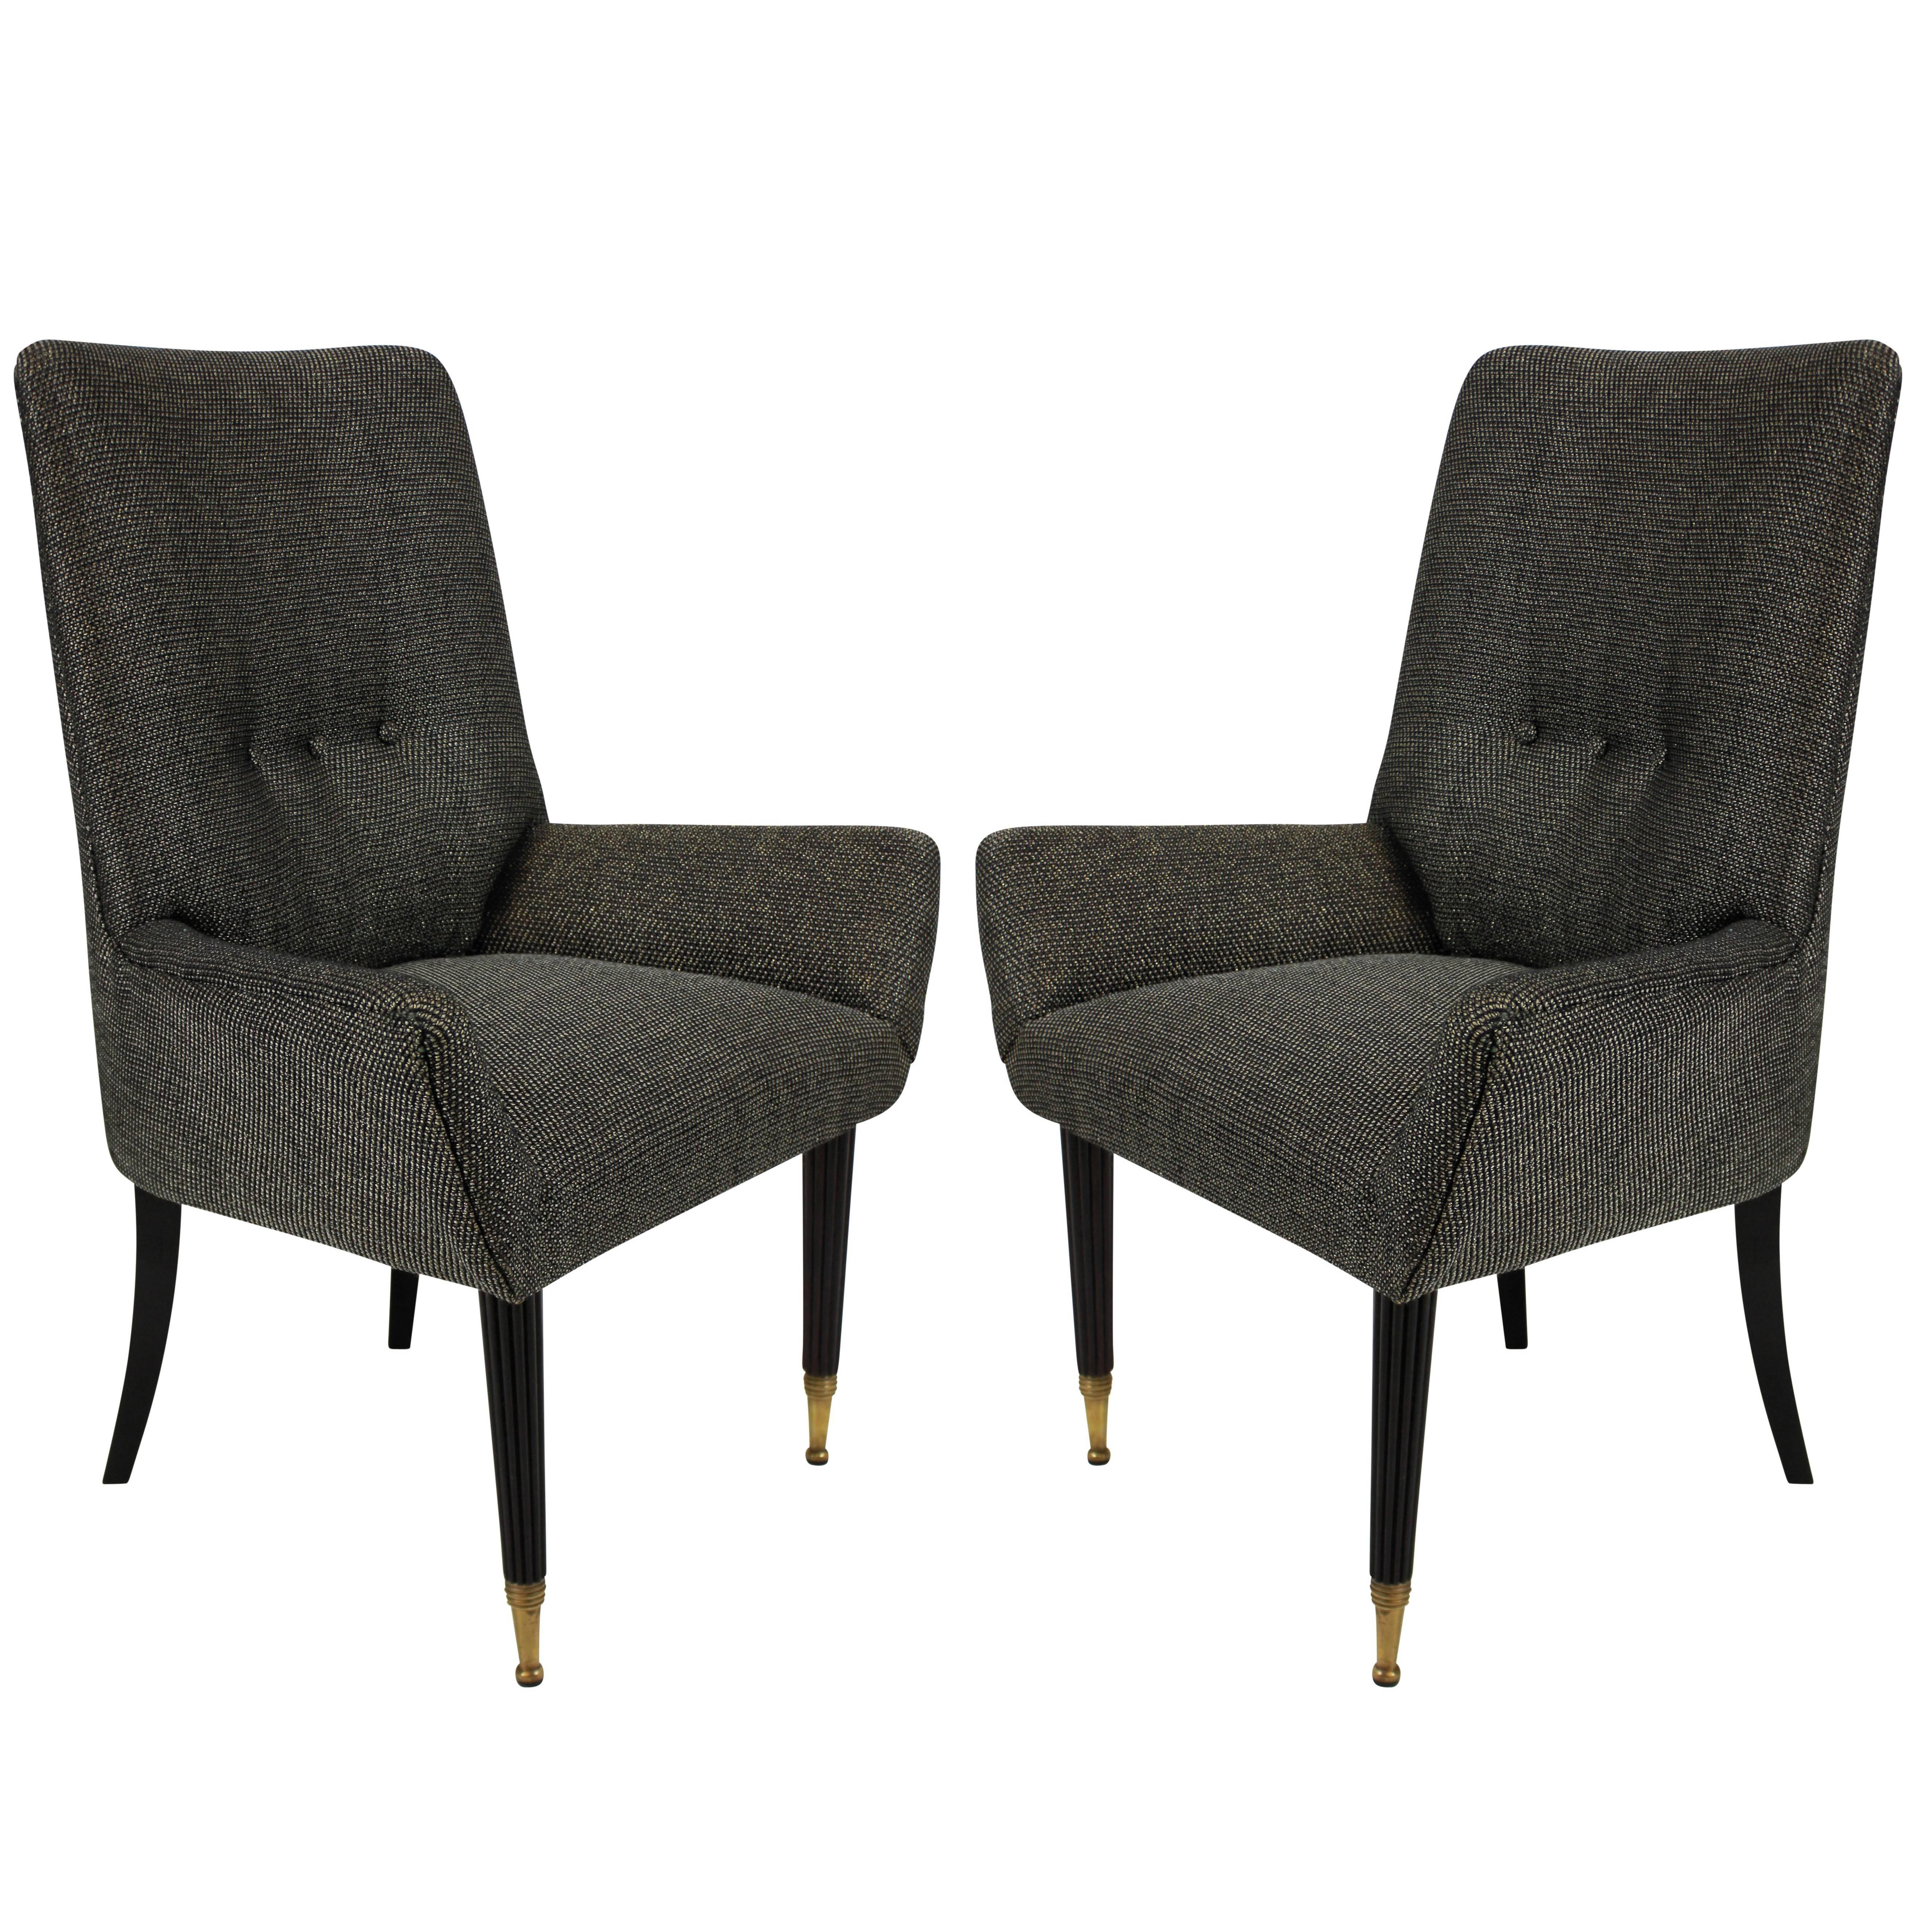 Pair of Stylish Italian Bedroom Chairs